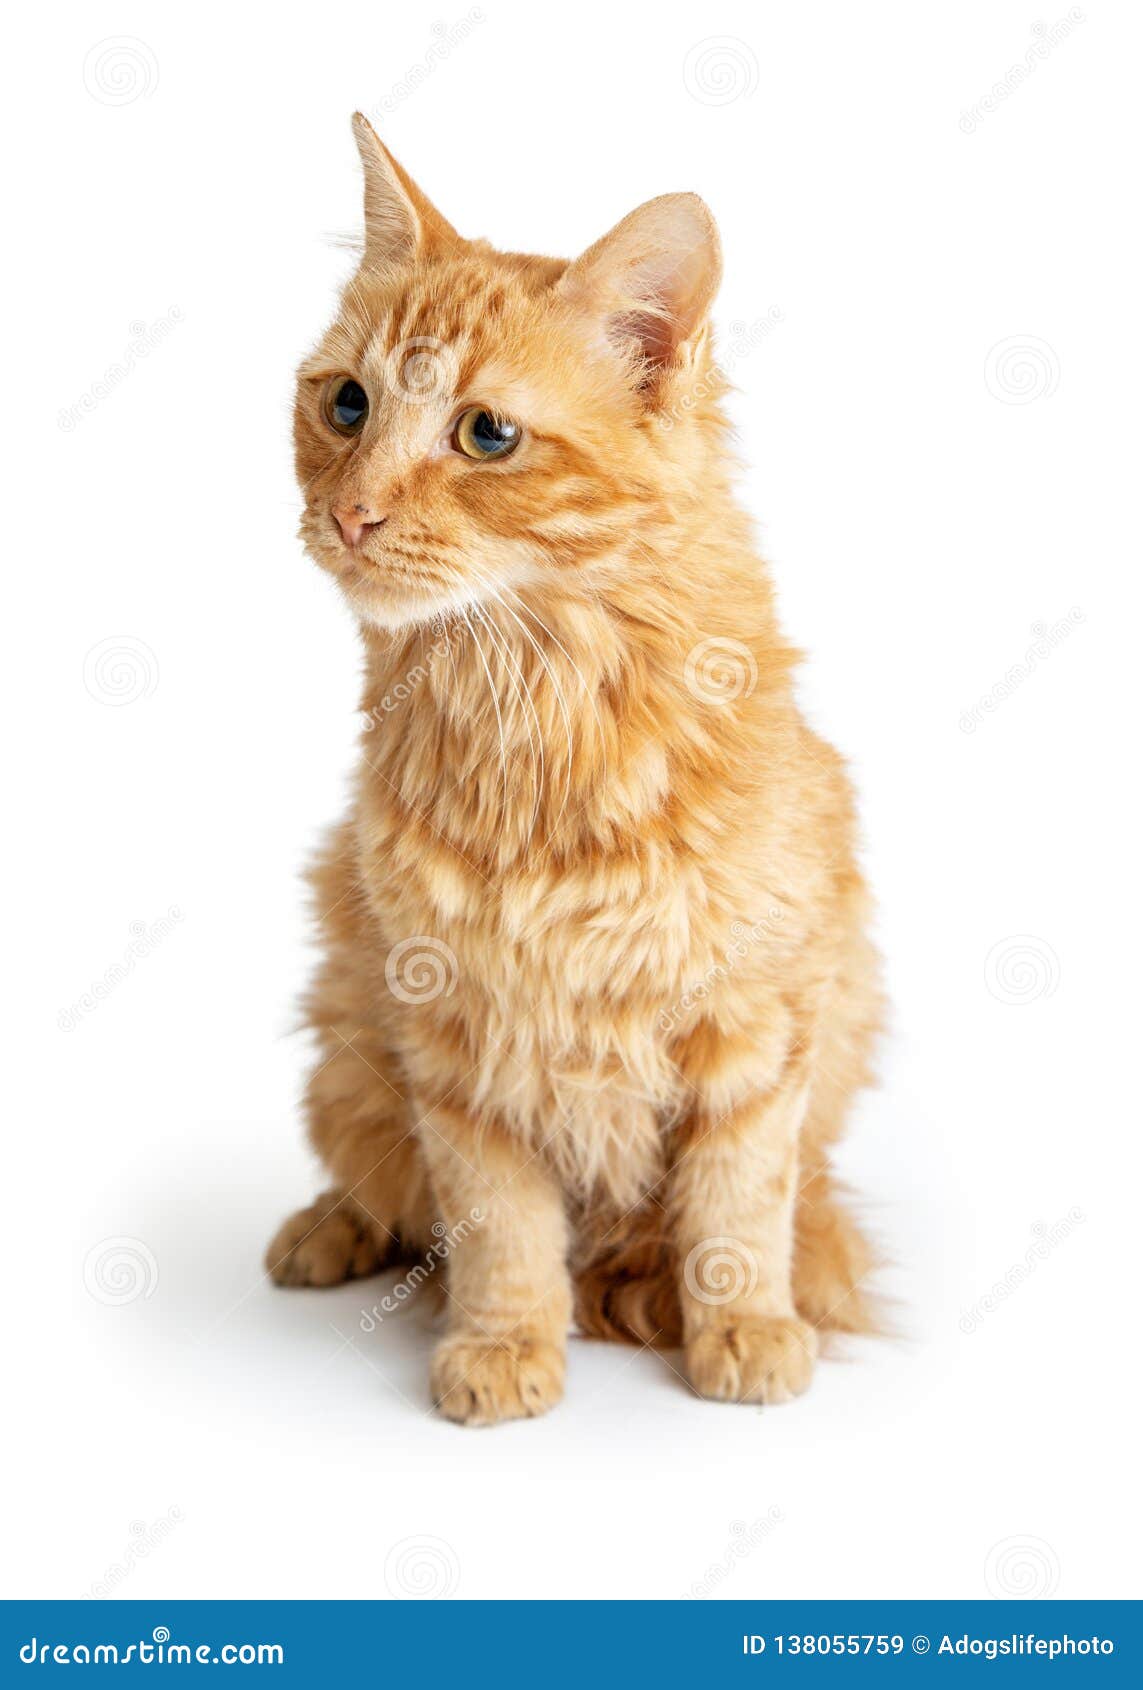 Orange Tabby Cat Long Hair Sitting Stock Image Image Of Background Side